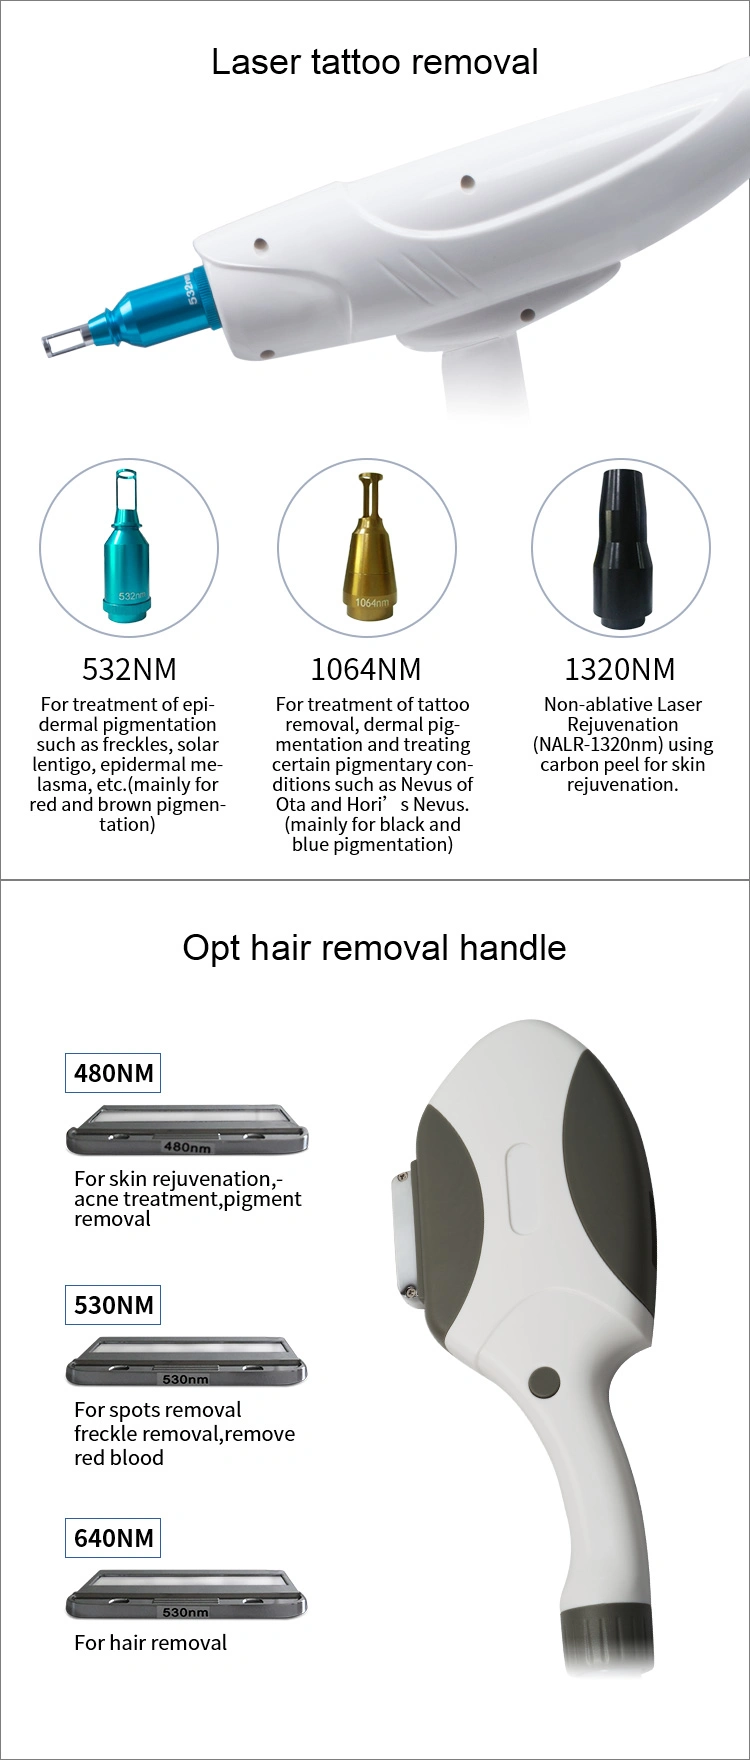 Multifunctional Portable IPL Shr Hair Removal ND YAG Laser E-Light Machine